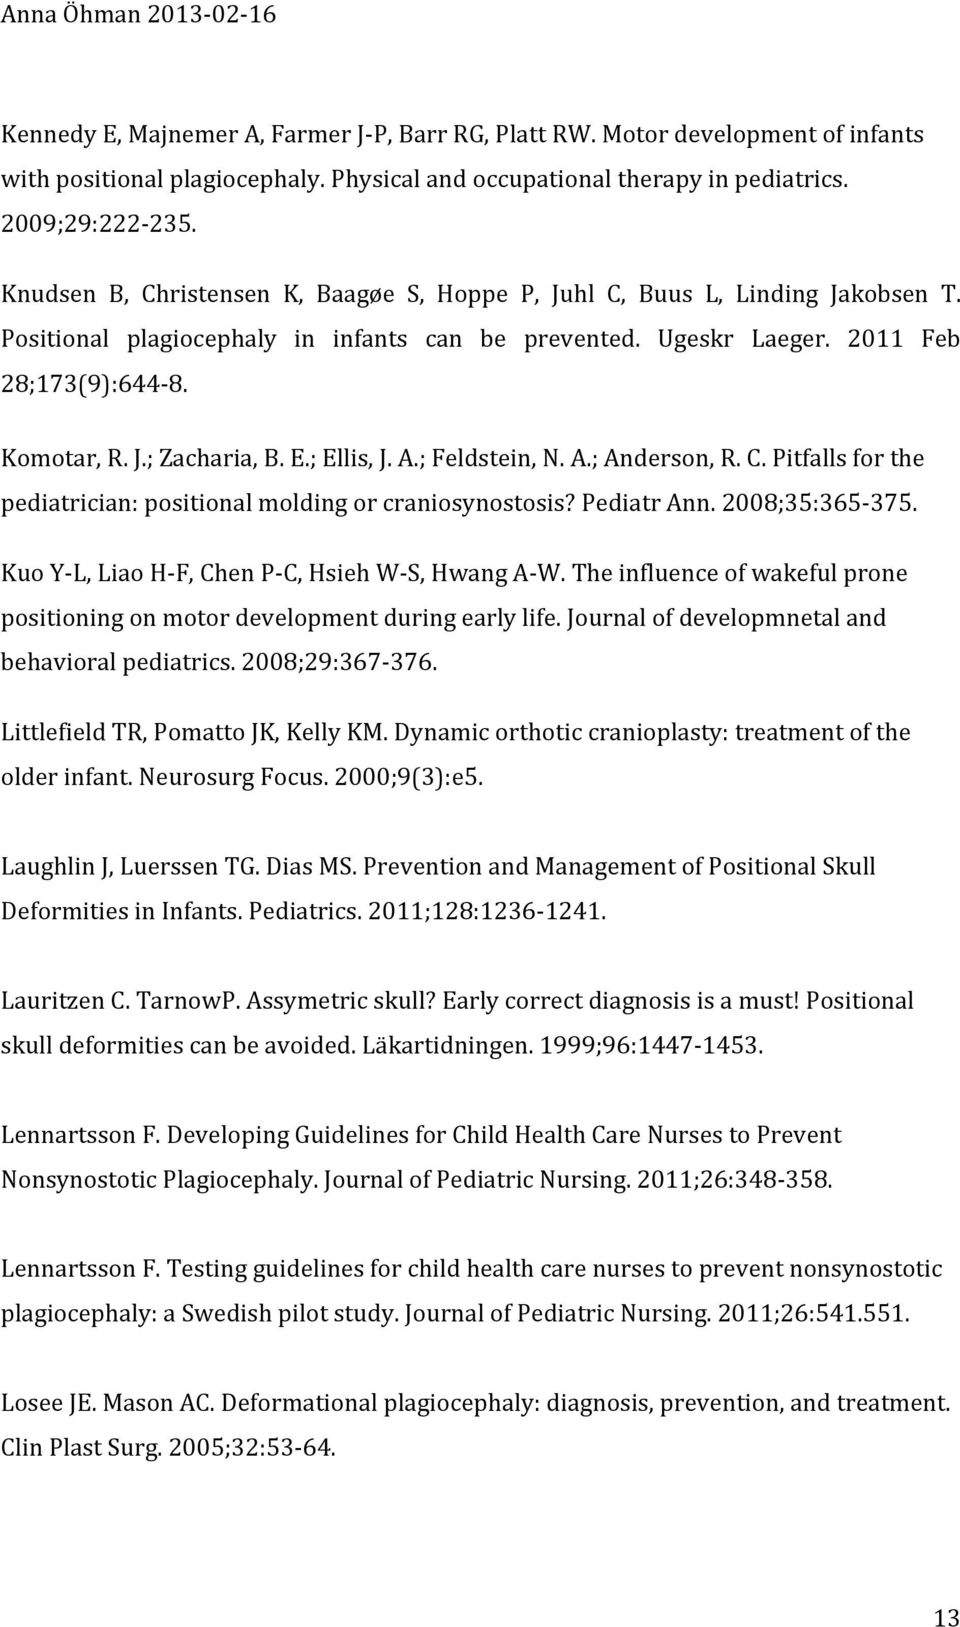 E.; Ellis, J. A.; Feldstein, N. A.; Anderson, R. C. Pitfalls for the pediatrician: positional molding or craniosynostosis? Pediatr Ann. 2008;35:365-375.